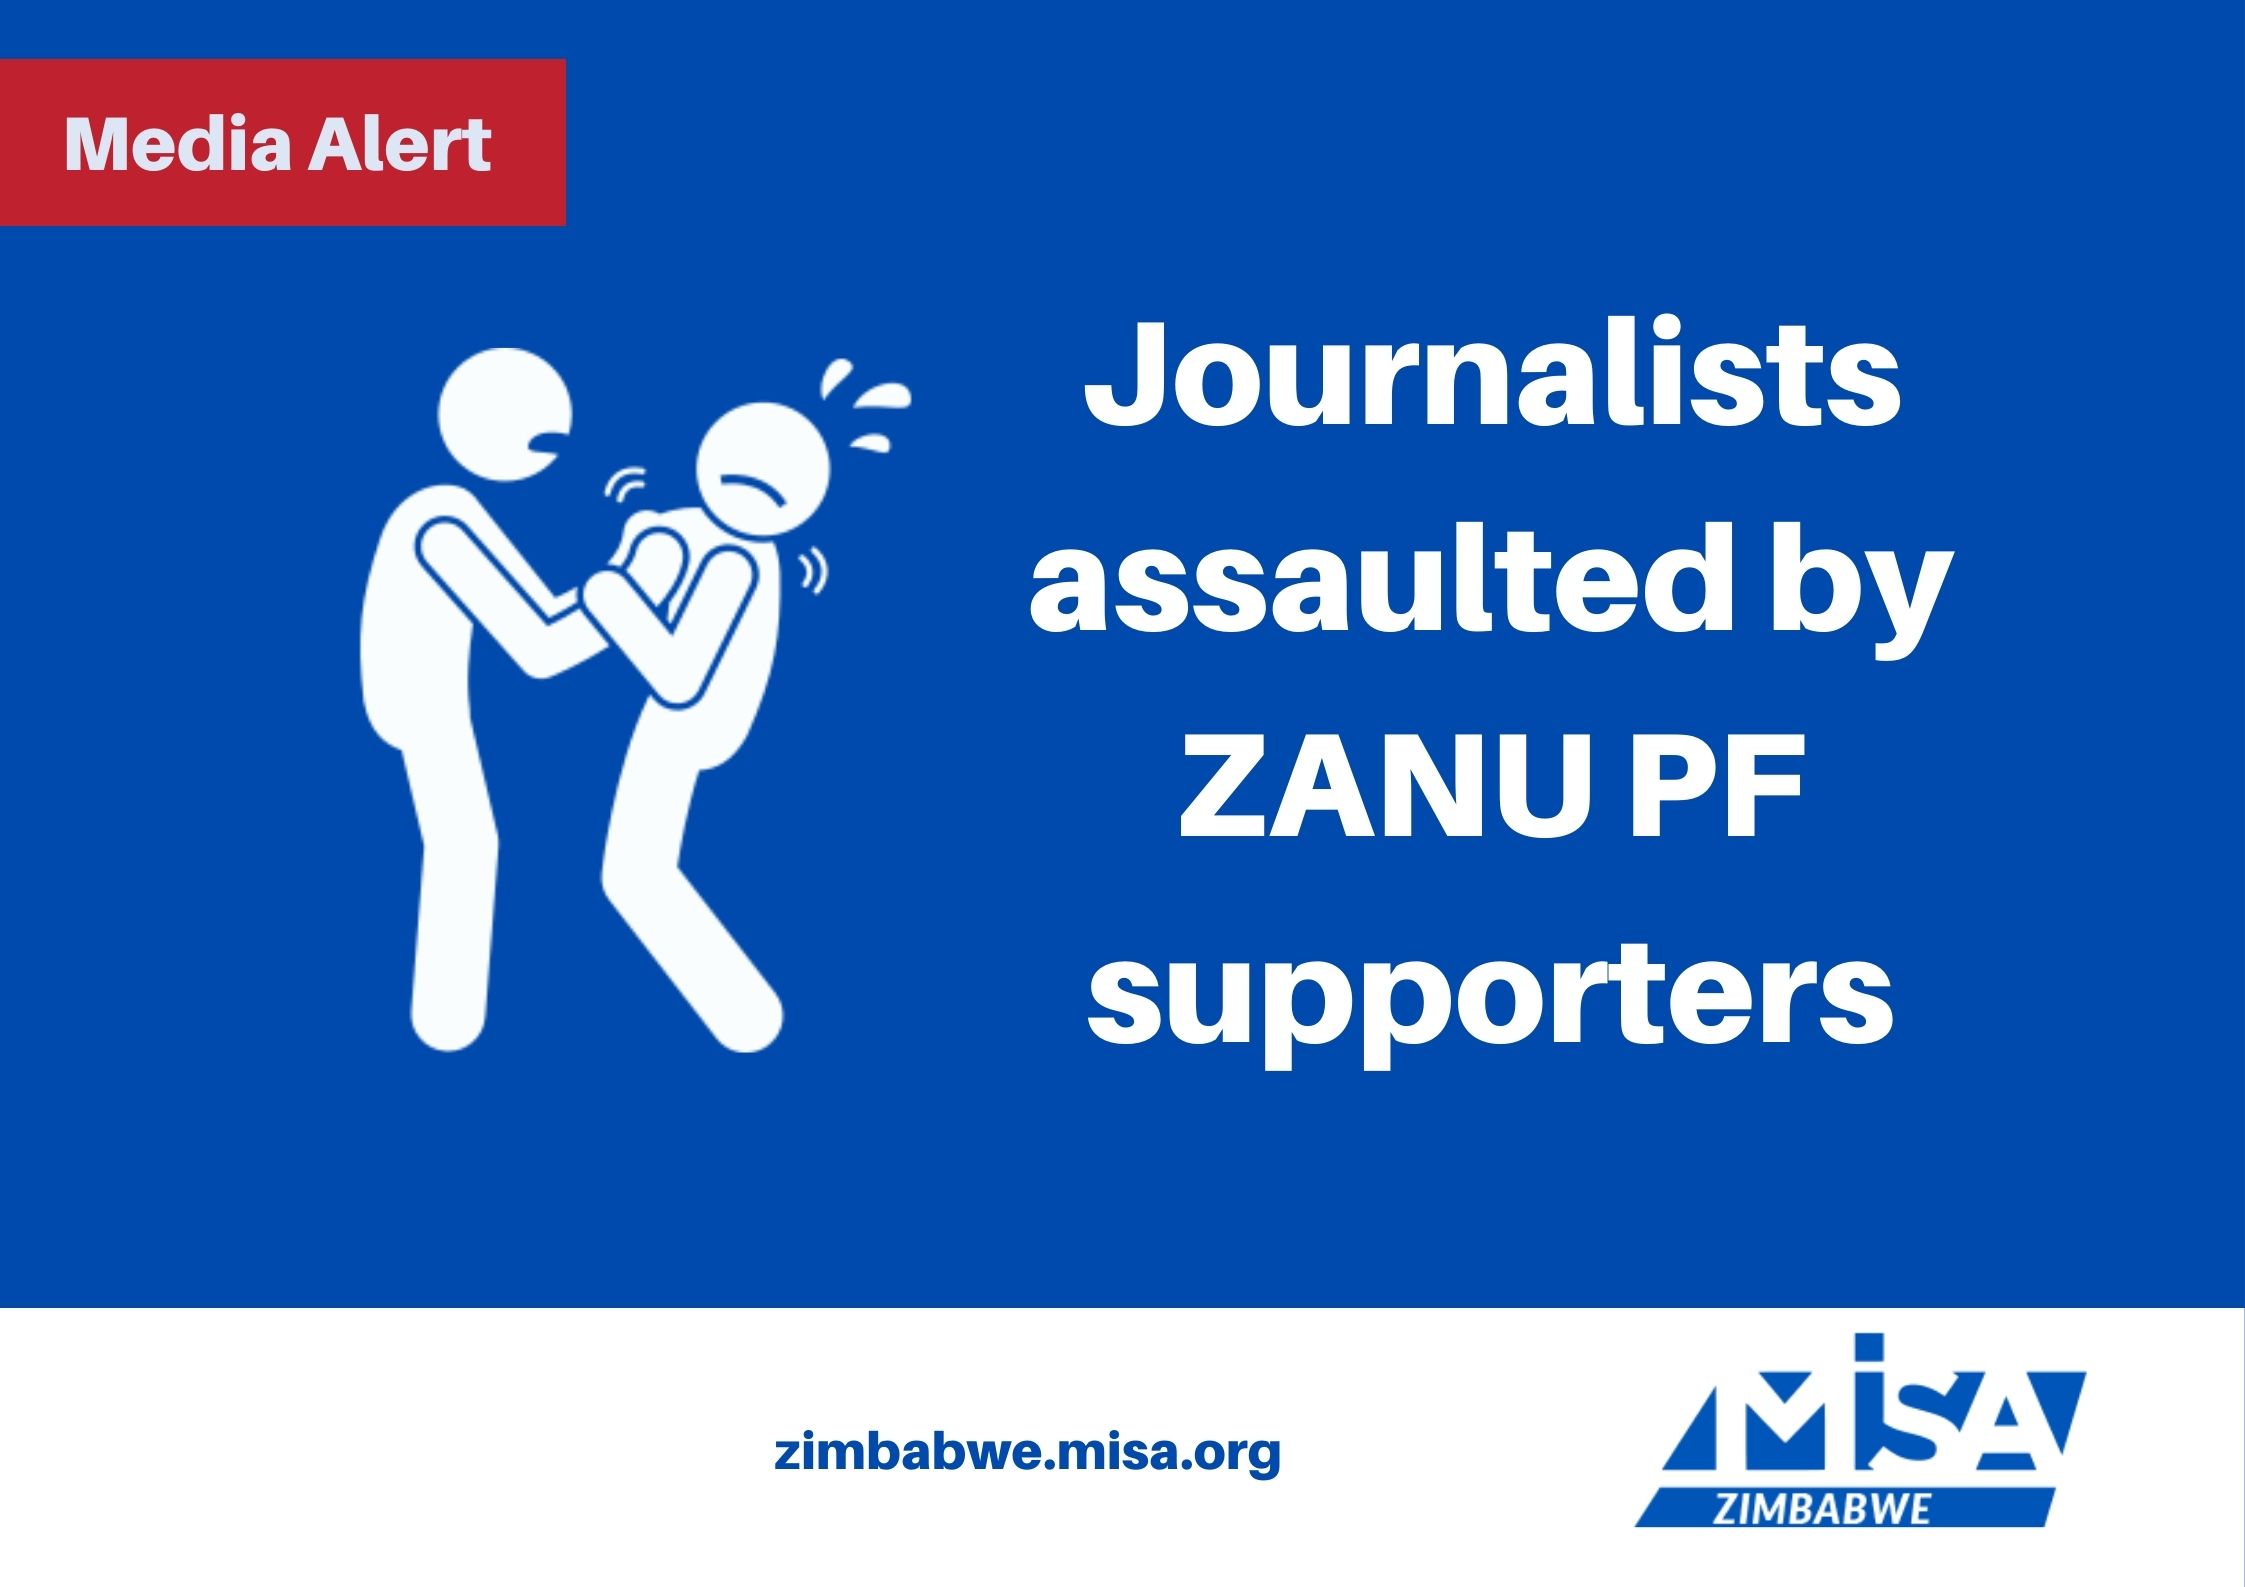 Journalists assaulted by ZANU PF supporters